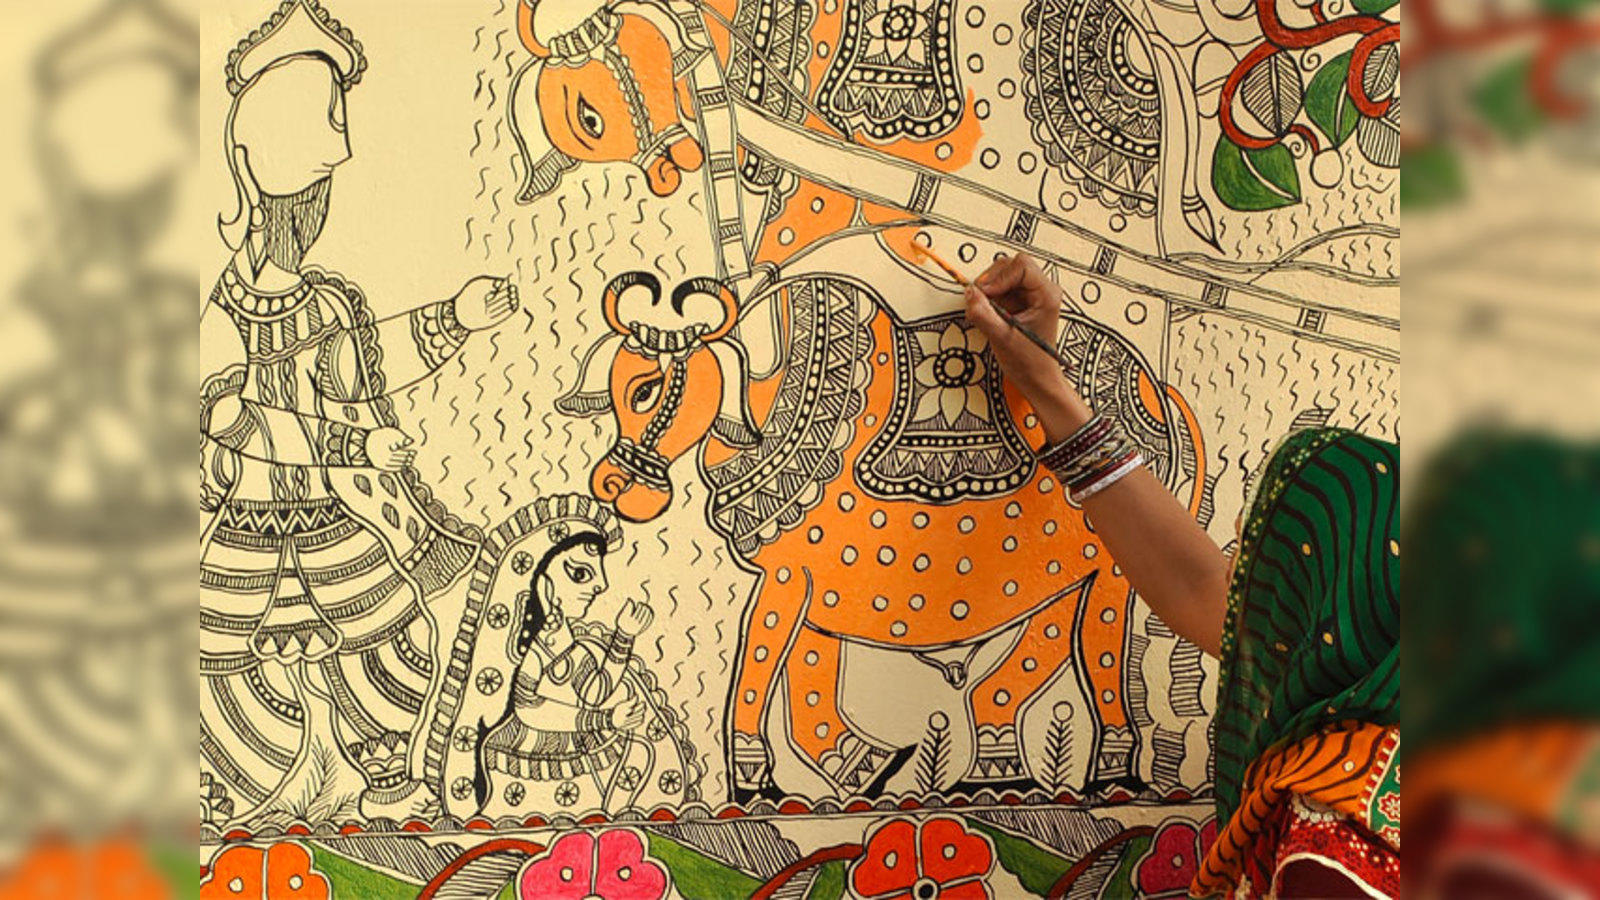 Painting Ideas - Indian Folk Art | Indian folk art, Madhubani painting, Folk  art painting